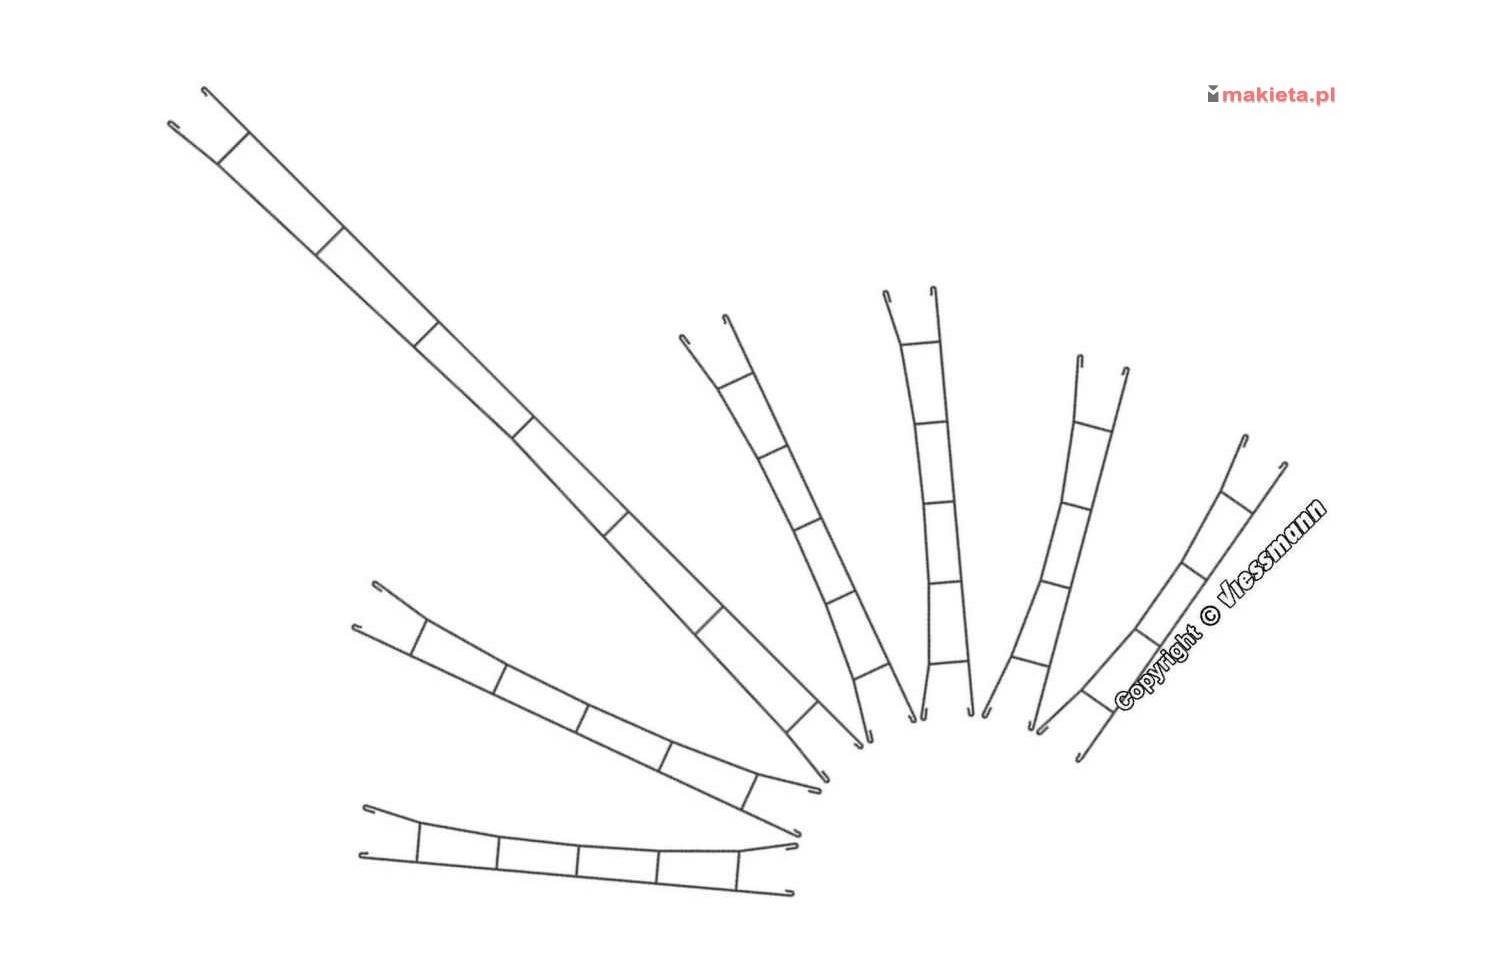 Viessmann 4331. Przewody sieci trakcyjnej, komplet, 3 sztuki x 222 mm, Ø 0,4 mm, skala N 1:160